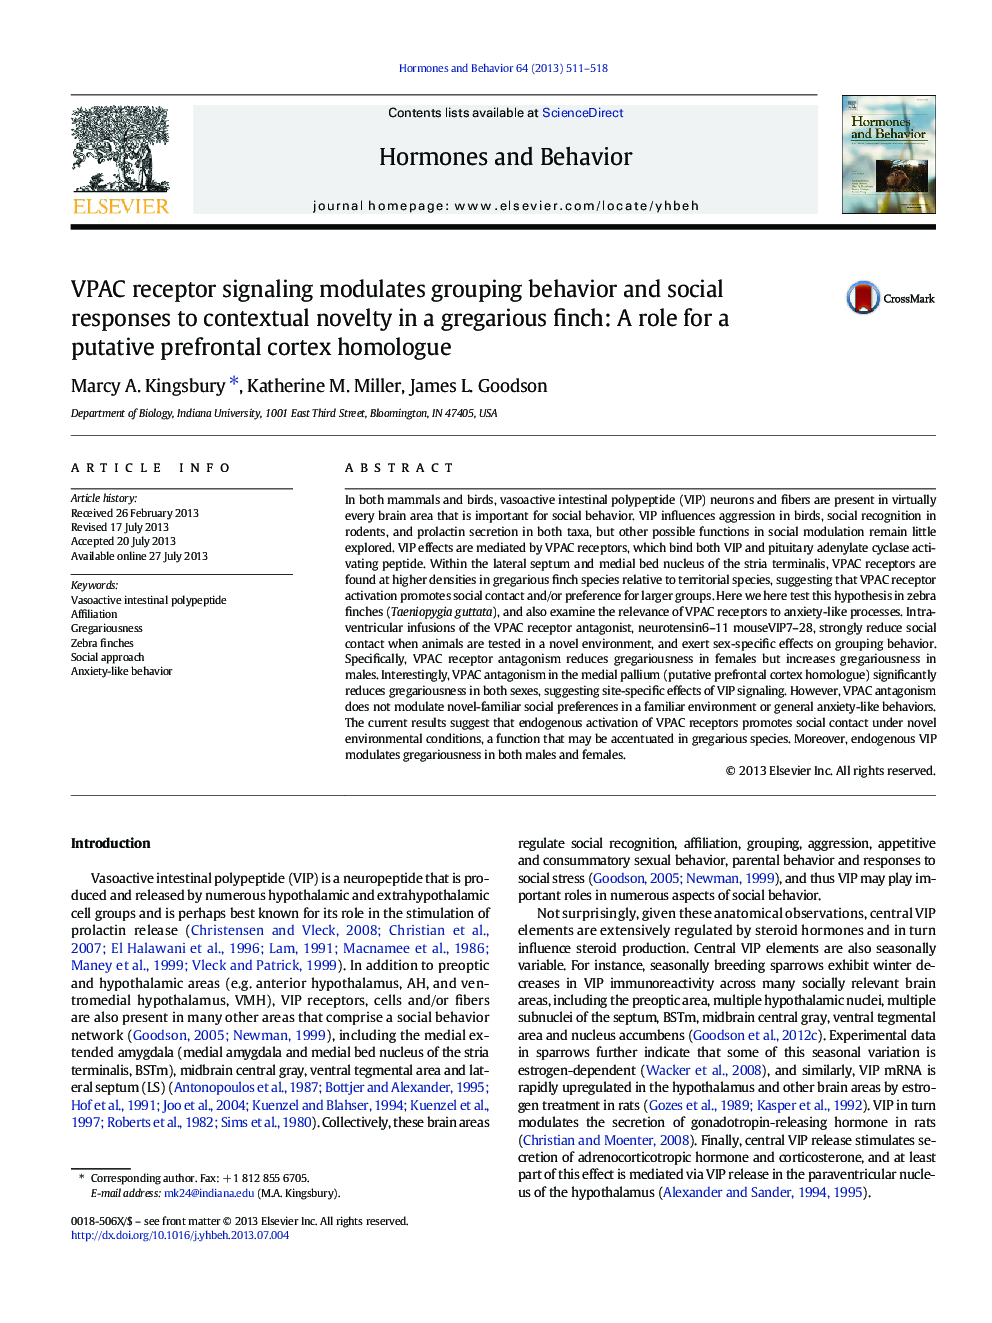 VPAC receptor signaling modulates grouping behavior and social responses to contextual novelty in a gregarious finch: A role for a putative prefrontal cortex homologue